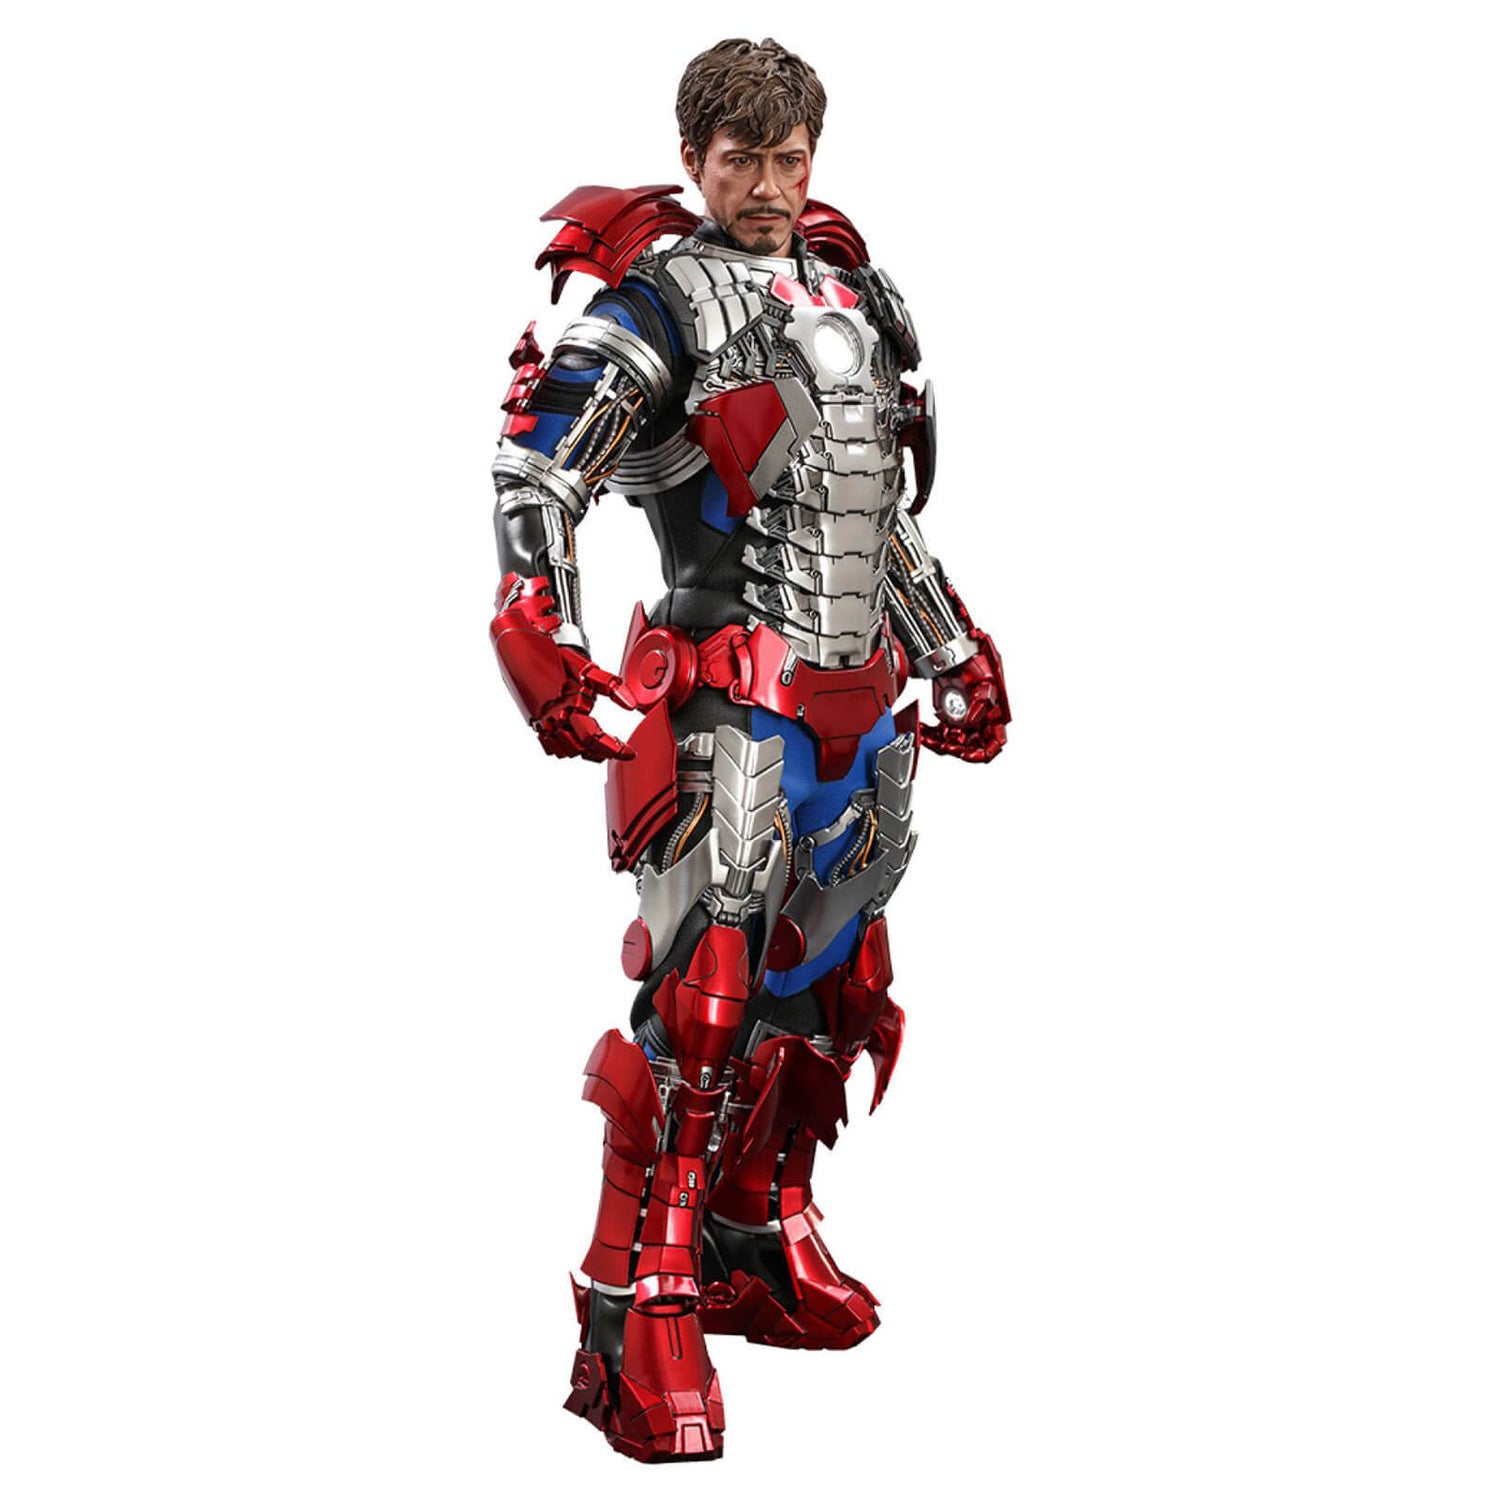 Hot Toys Iron Man 2 Movie Masterpiece Actionfigur im Maßstab 1:6 Tony Stark (Mark V Suit Up Version) 31 cm